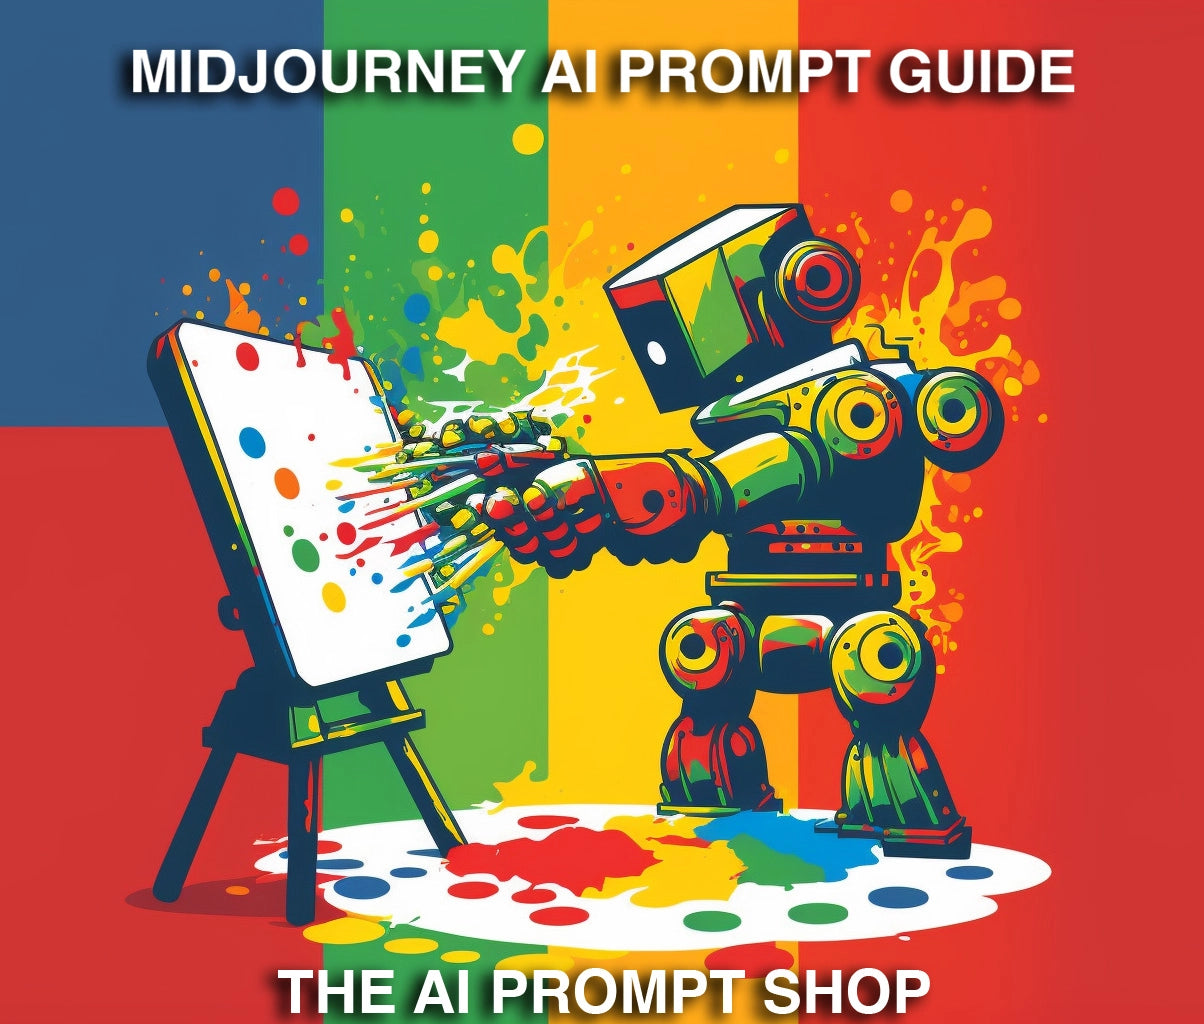 Midjourney AI Prompt Guide